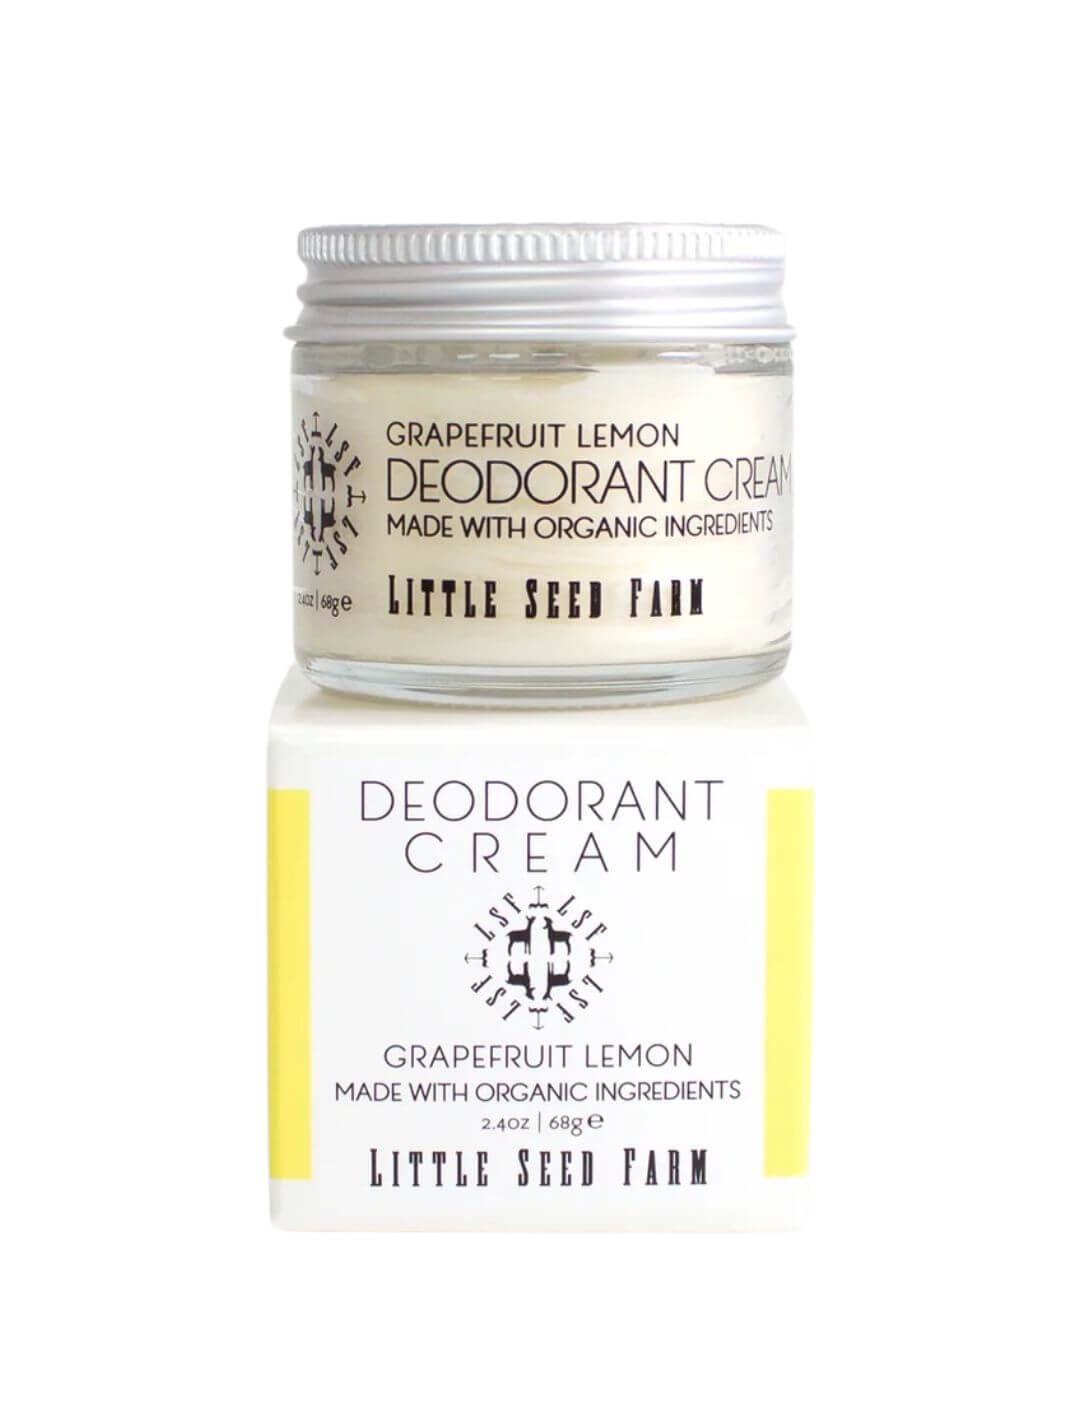 Little Seed Farm Natural Deodorant Cream Grapefruit Lemon